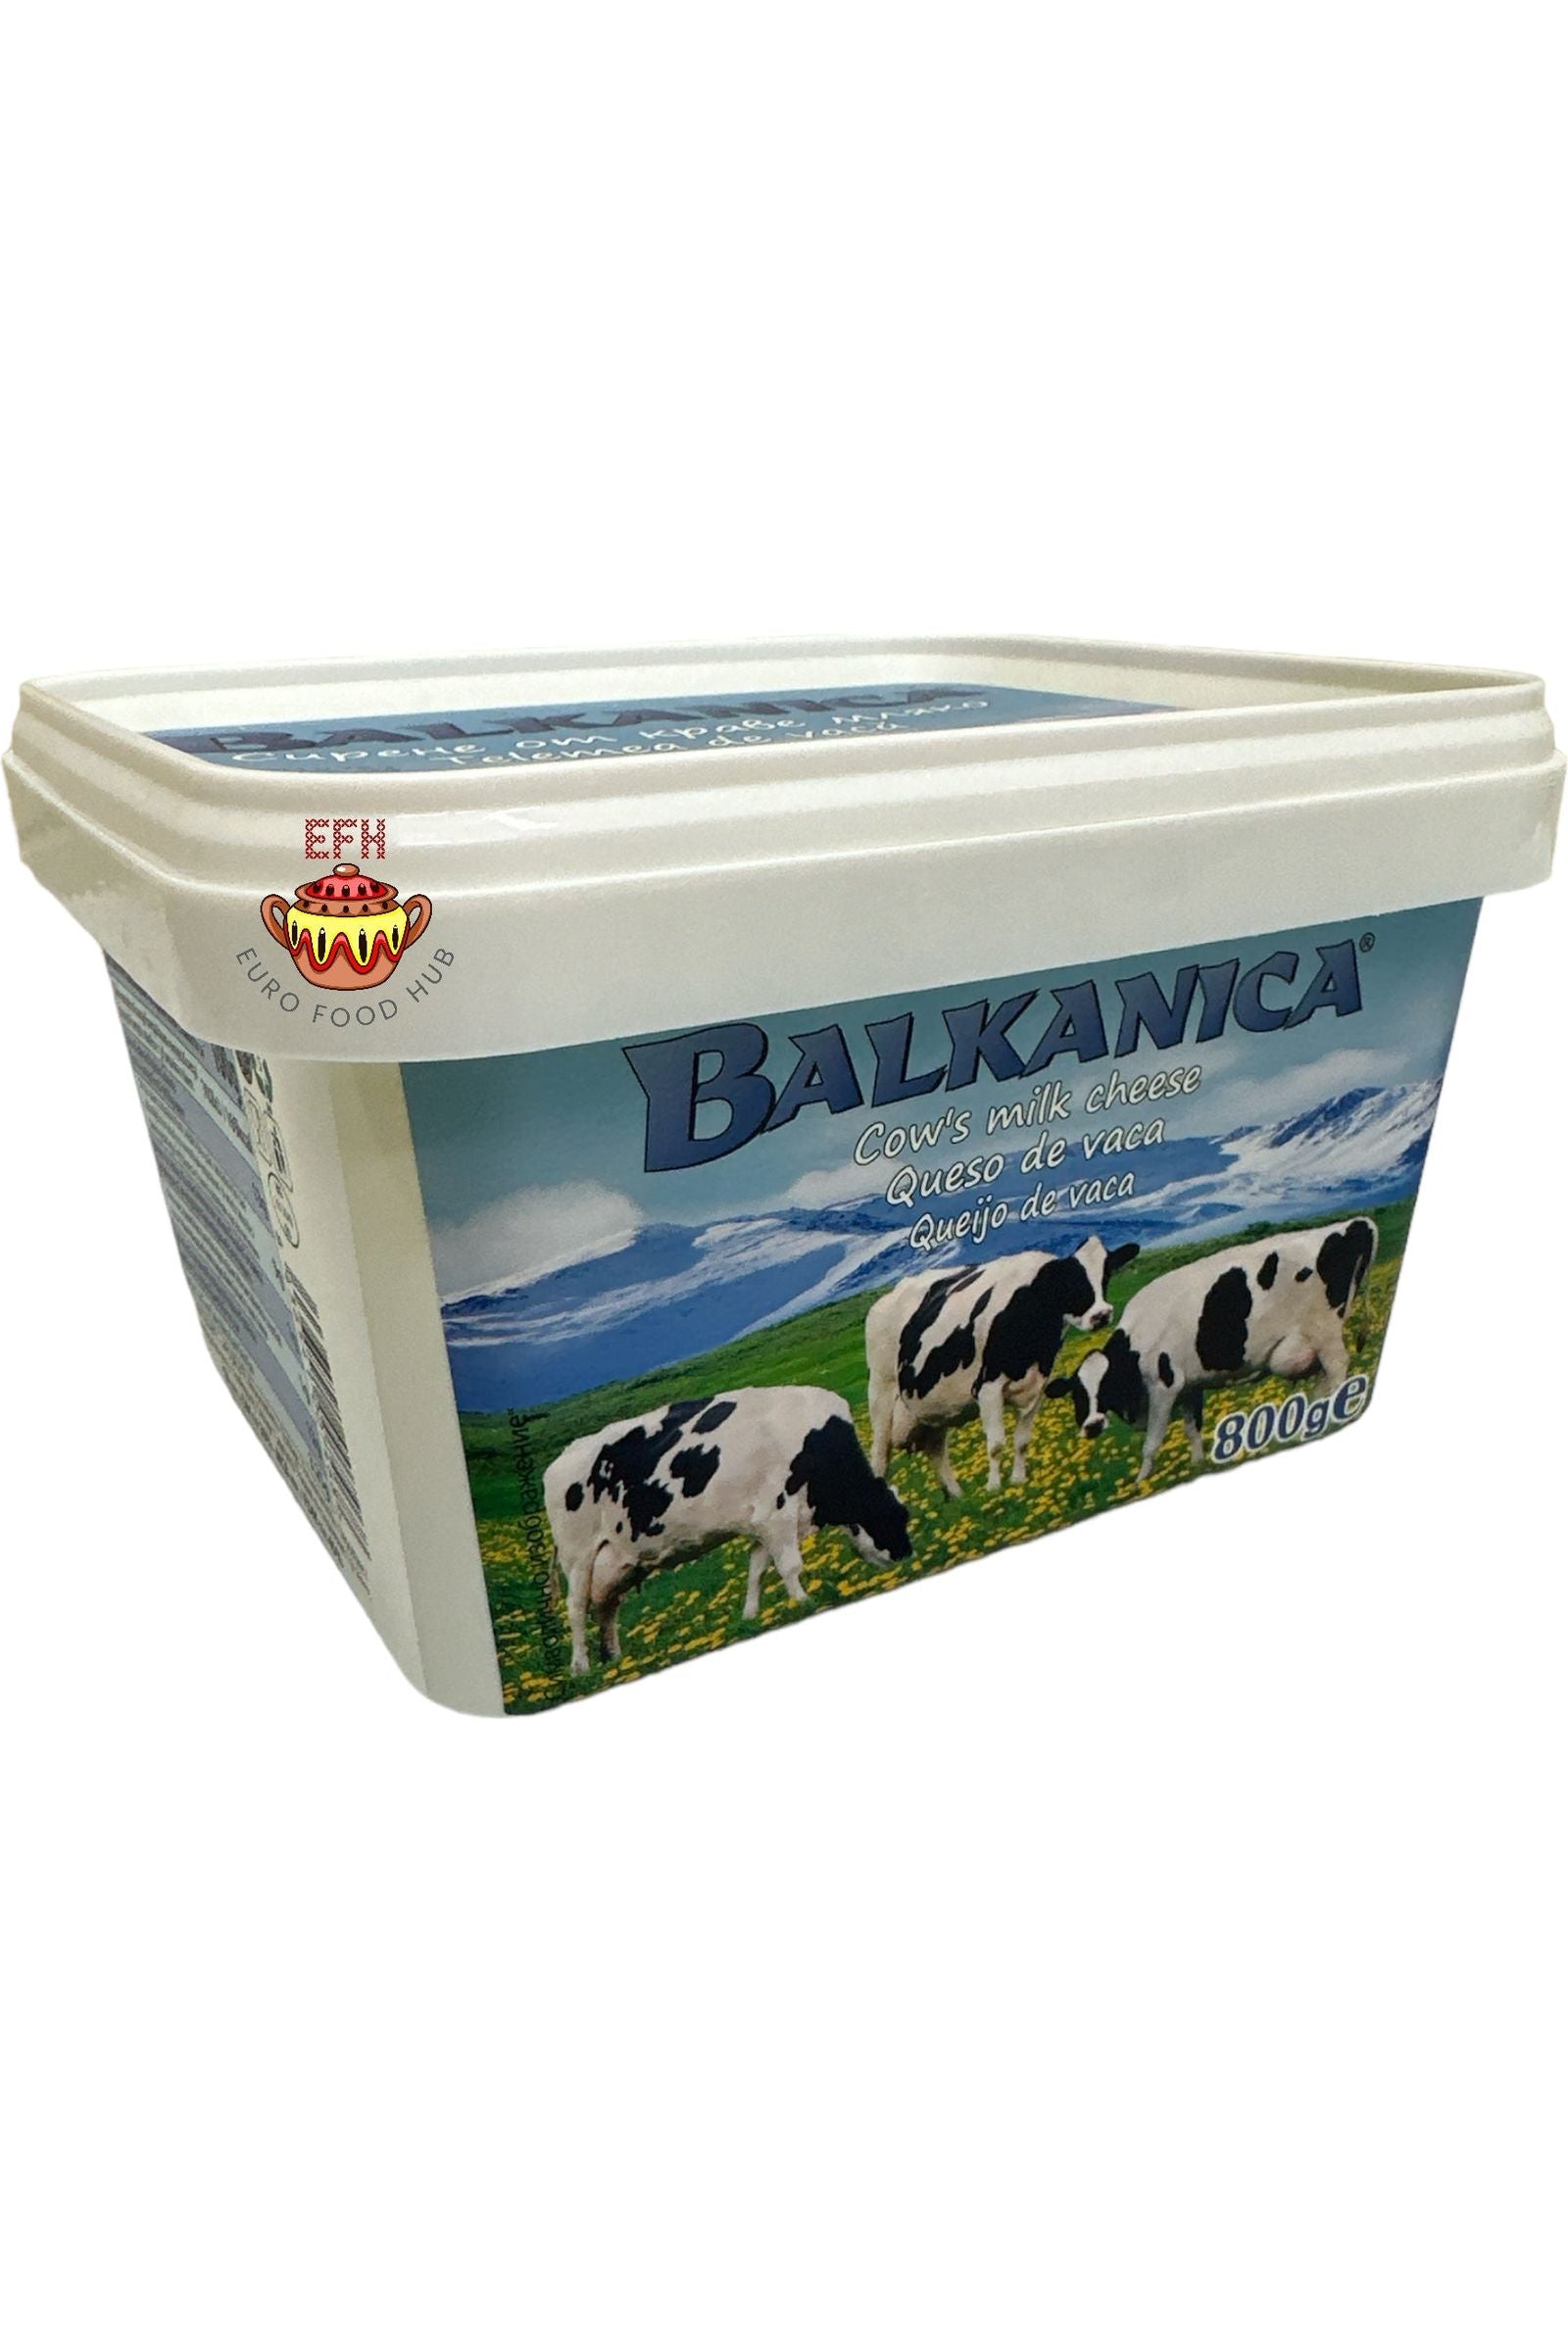 COW's Milk Cheese - BALKANICA - PVC 800g